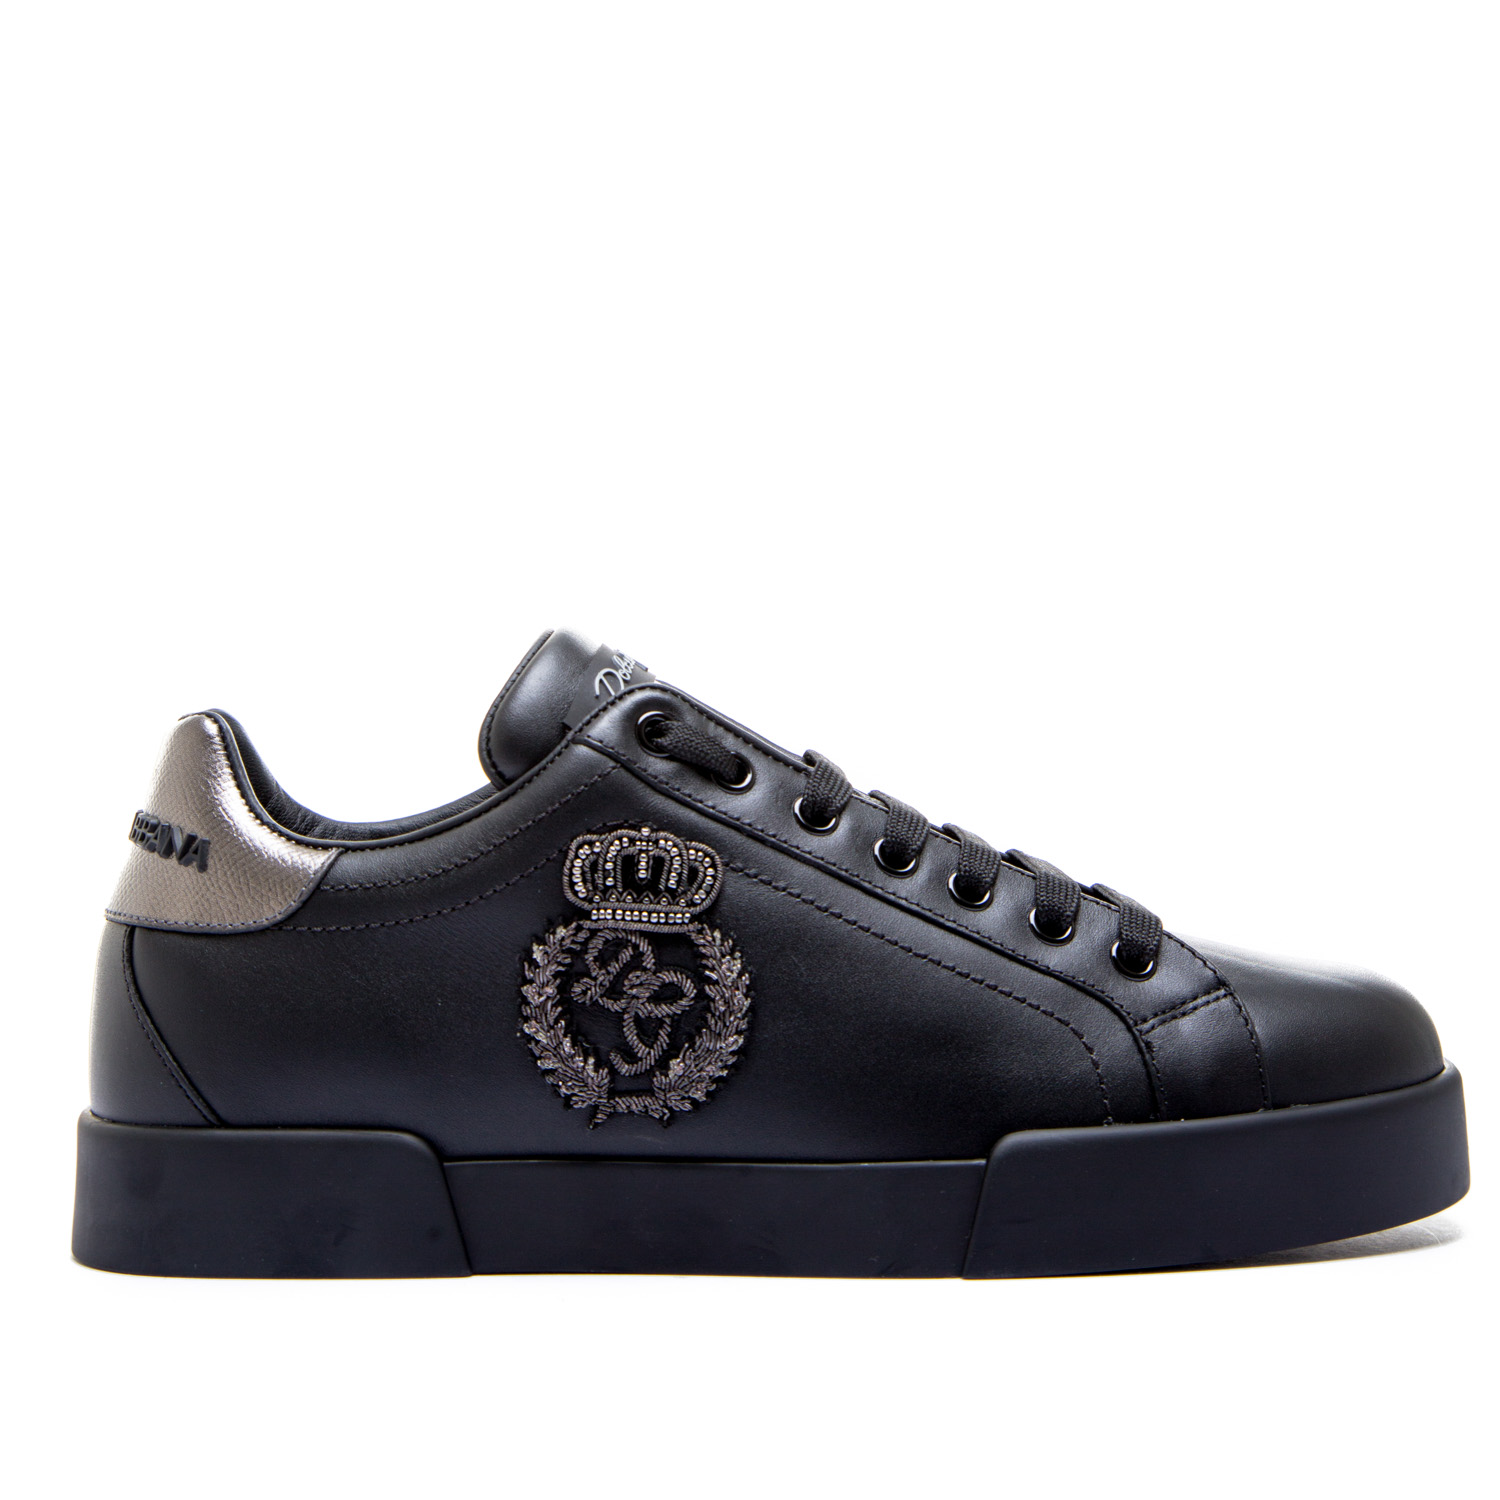 Dolce & Gabbana Lowtop Sneaker | Credomen